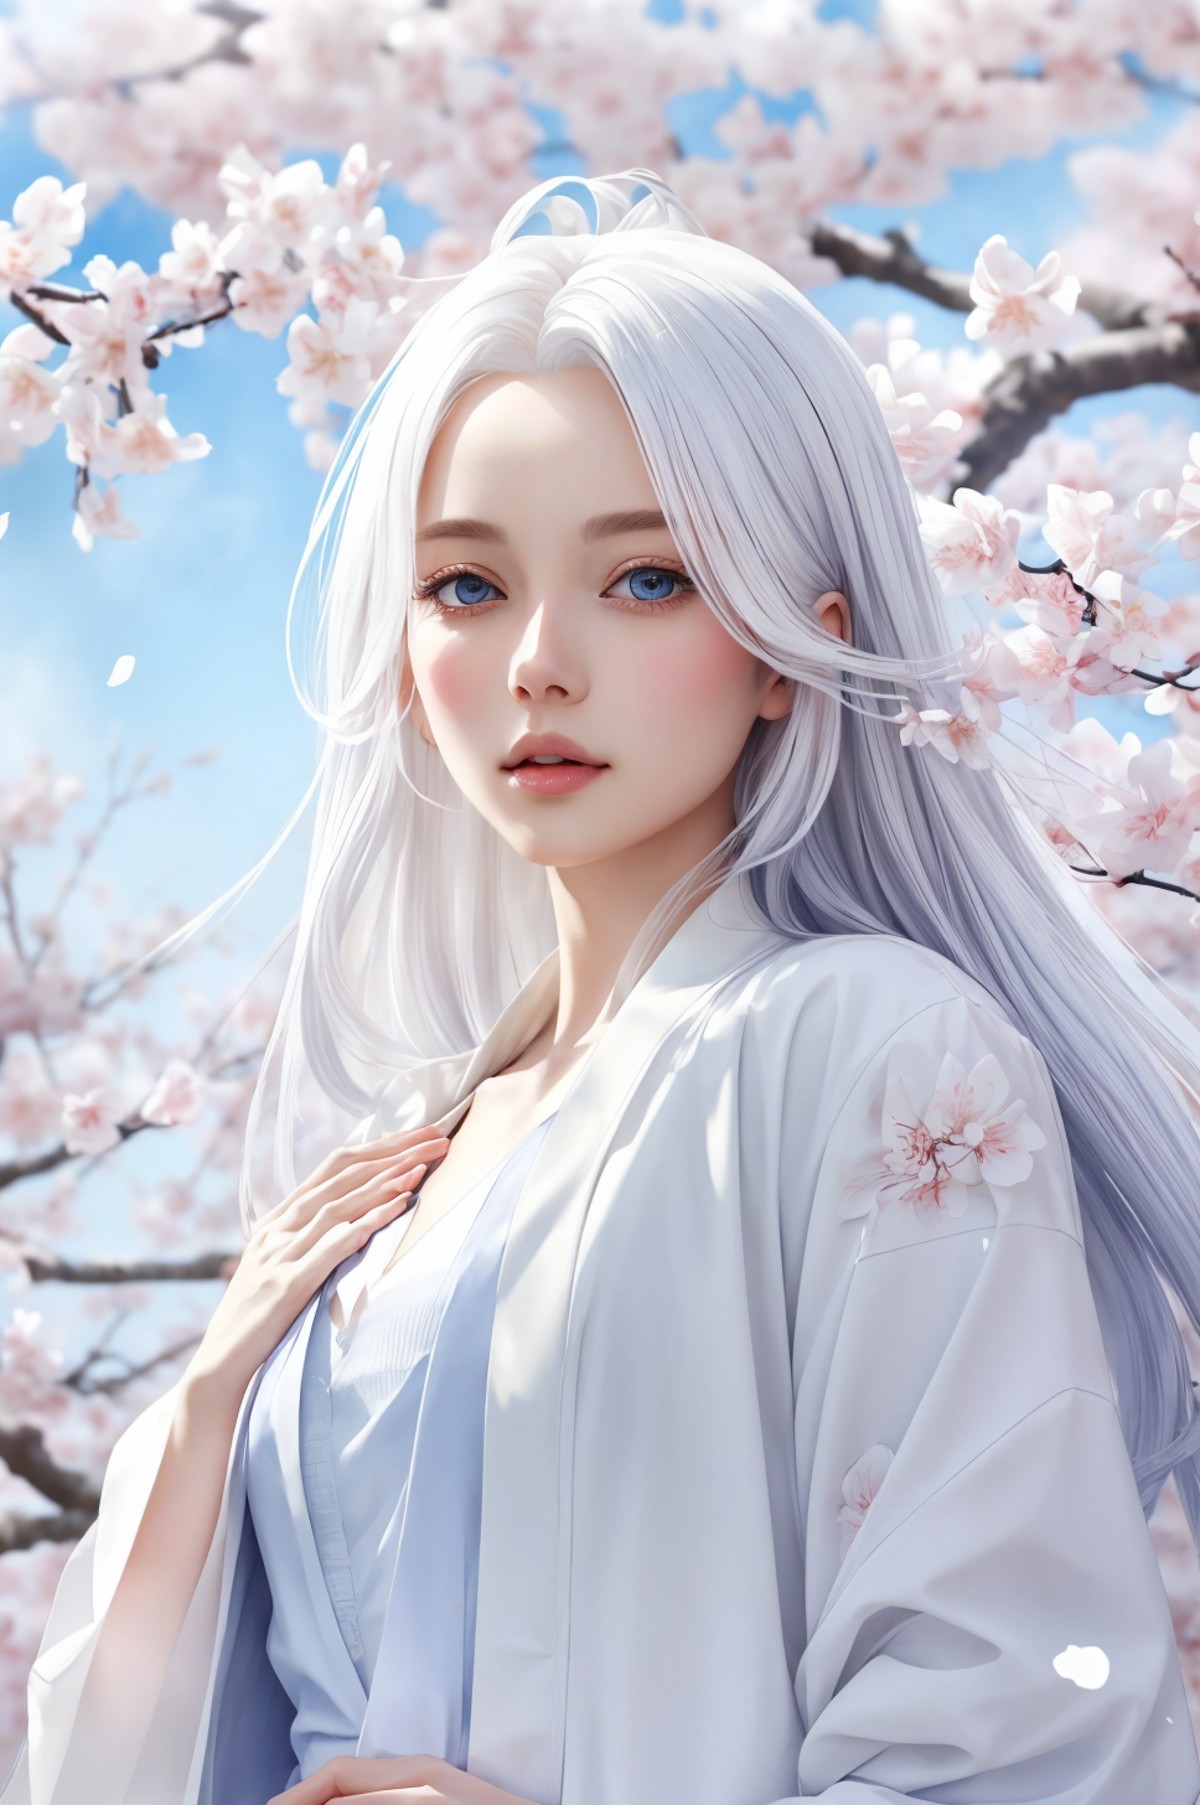 upper body, a beautiful 1woman long white hair, open jacket white shirt, posing under sakura blossoming petals flowers, in...